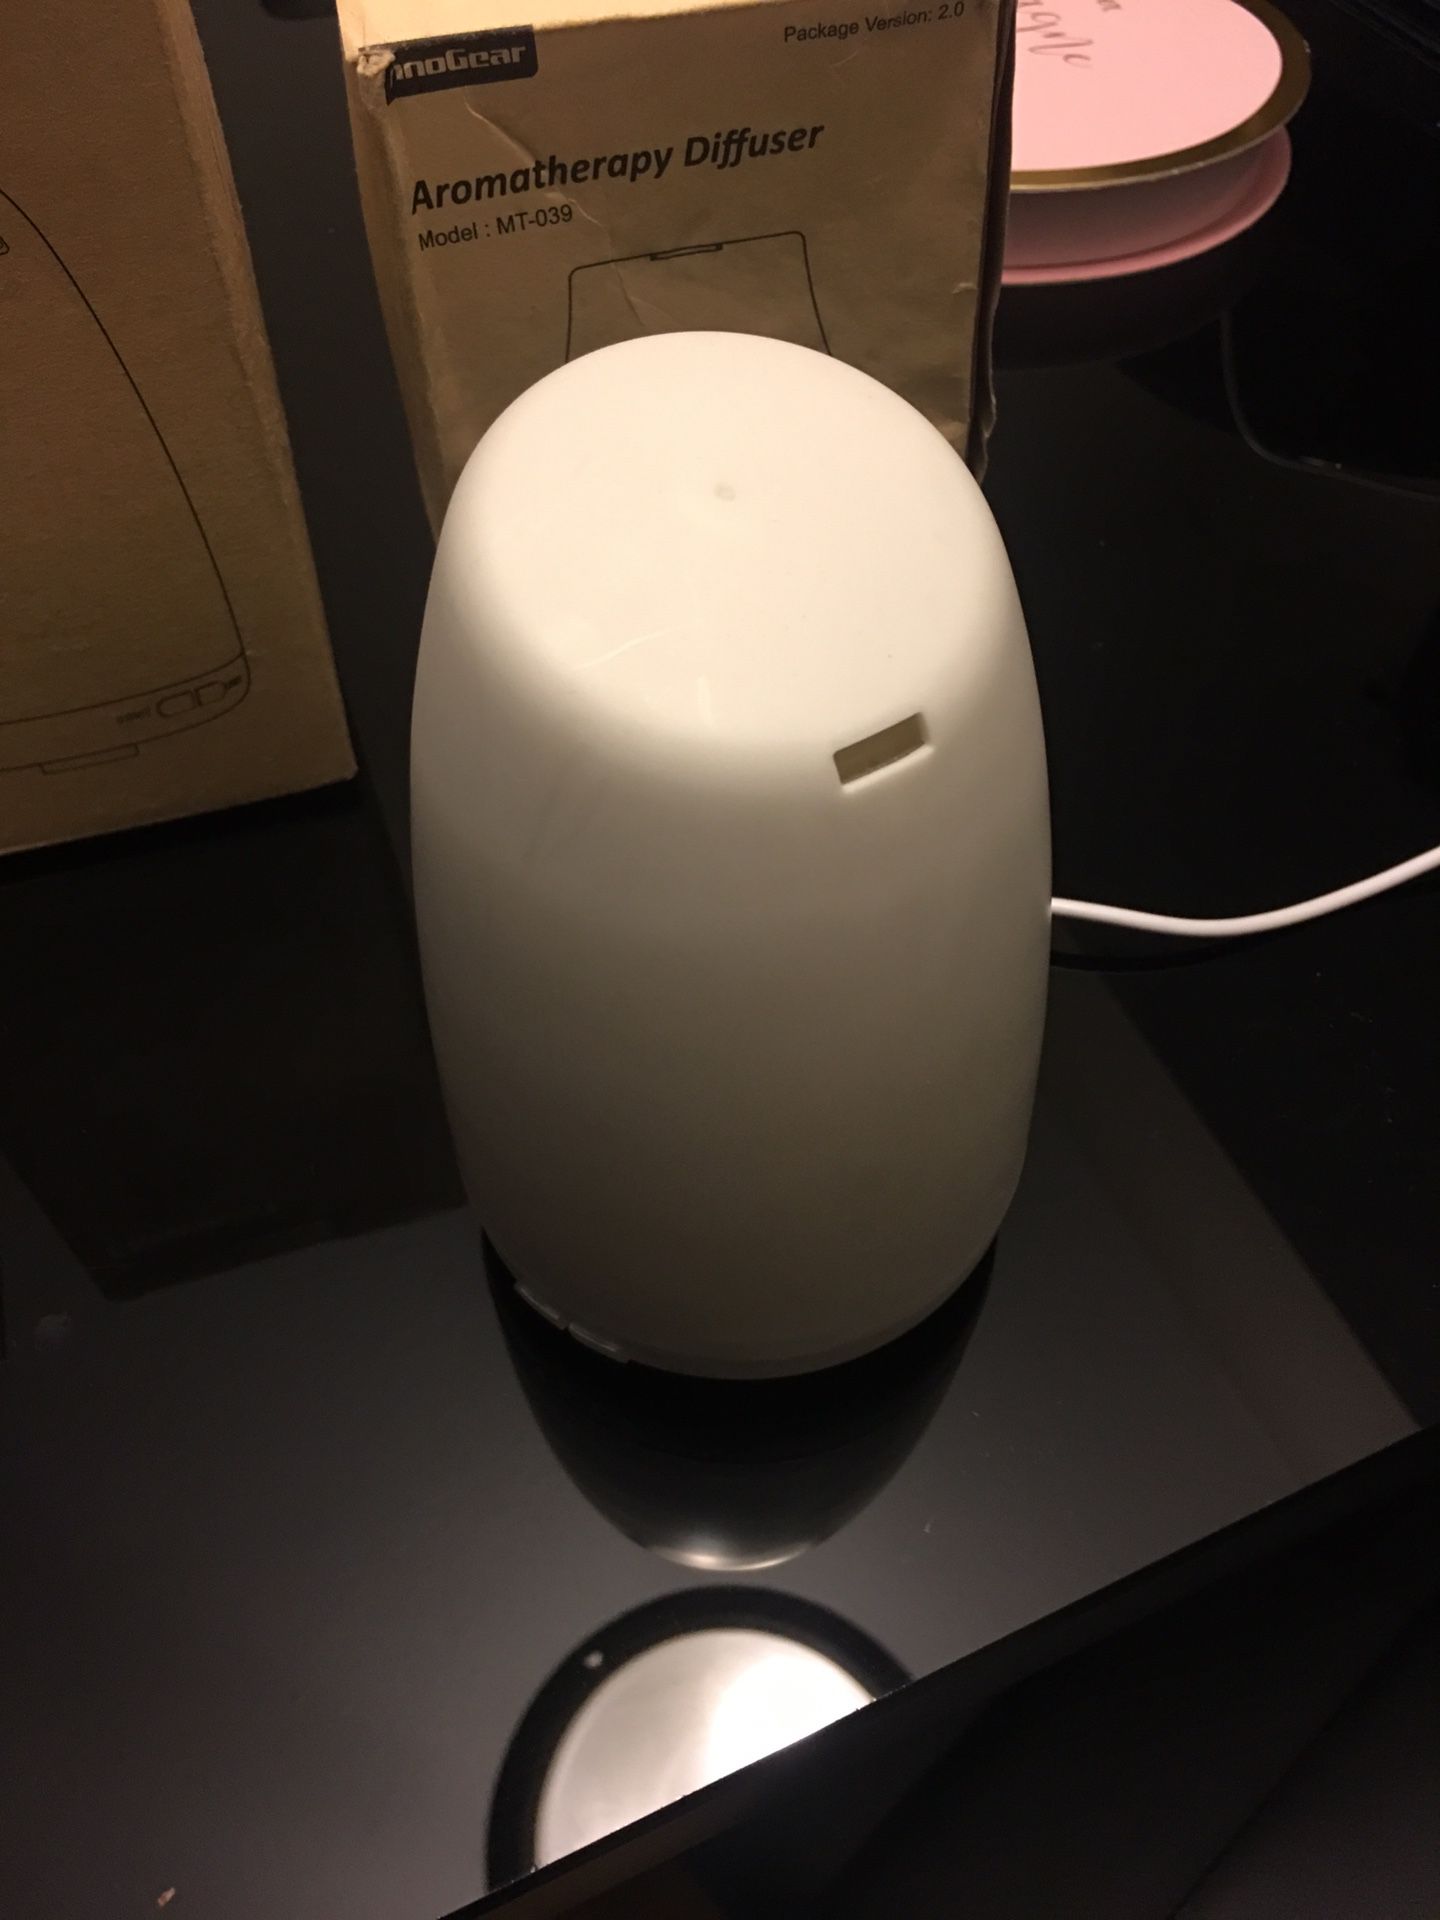 Oil Aromatherapy Diffuser (Air Freshener)